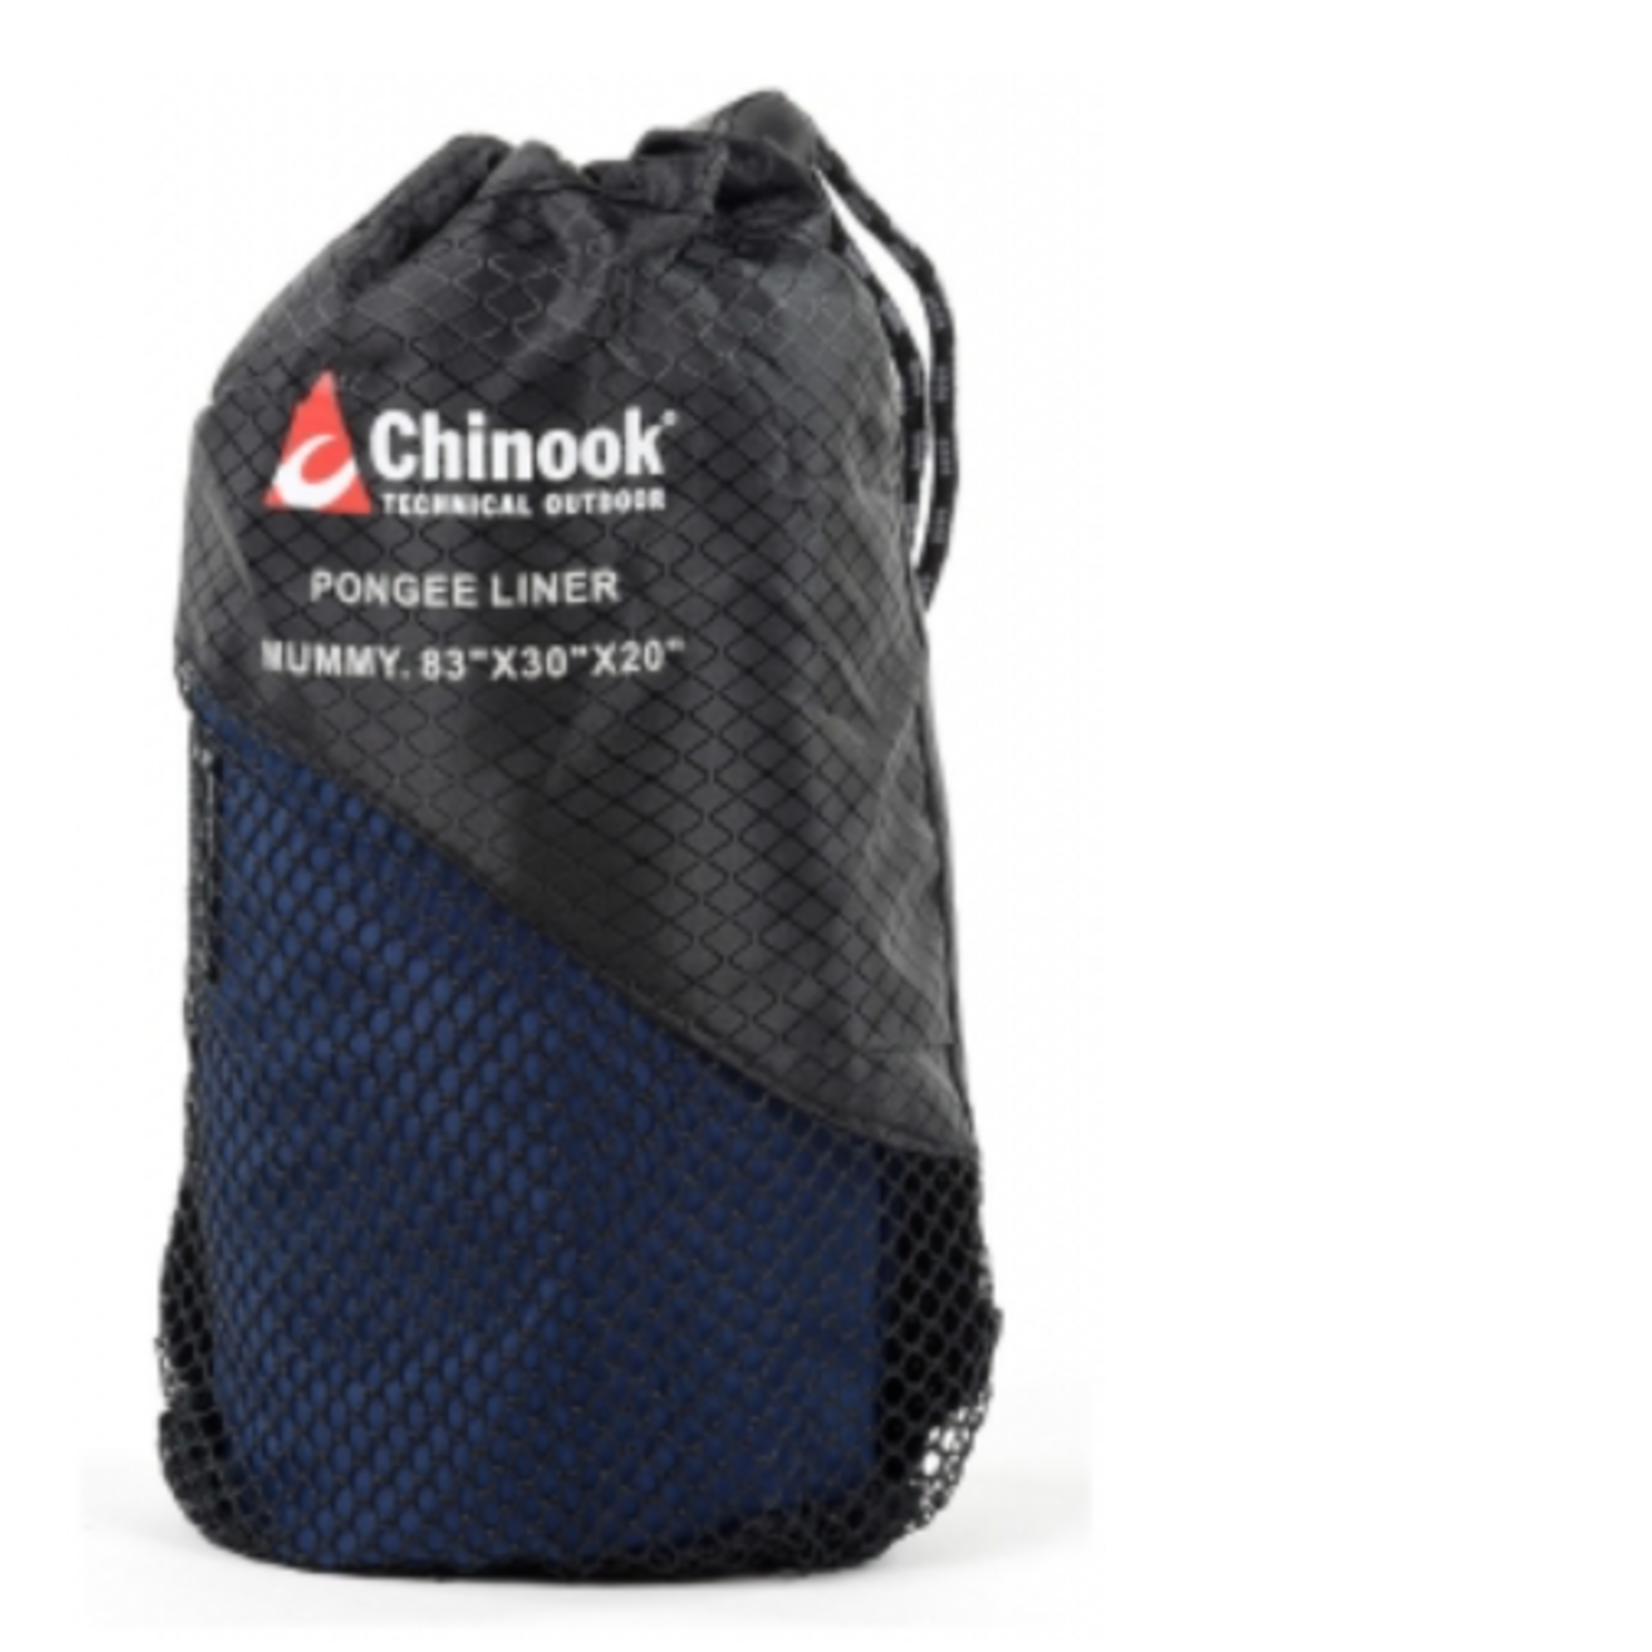 Chinooktec Protège-sac de couchage mummy